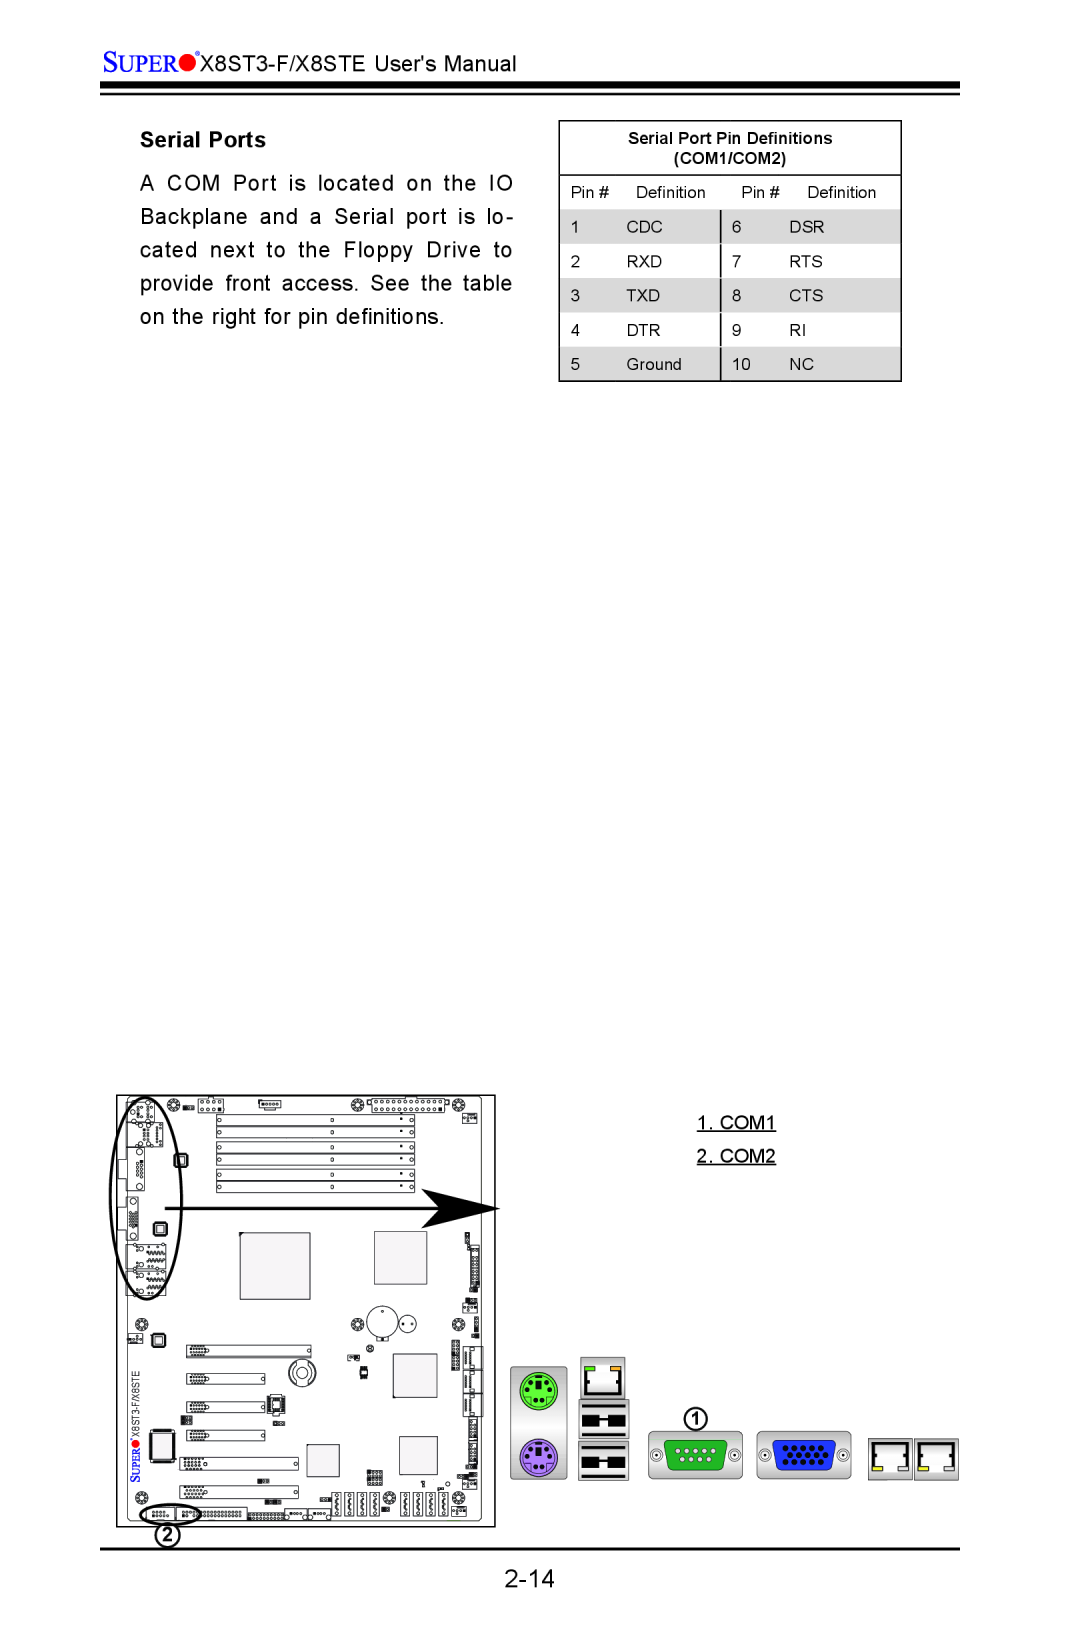 SUPER MICRO Computer user manual 2-14, Serial Ports, COM1 2. COM2, X8ST3-F/X8STE 